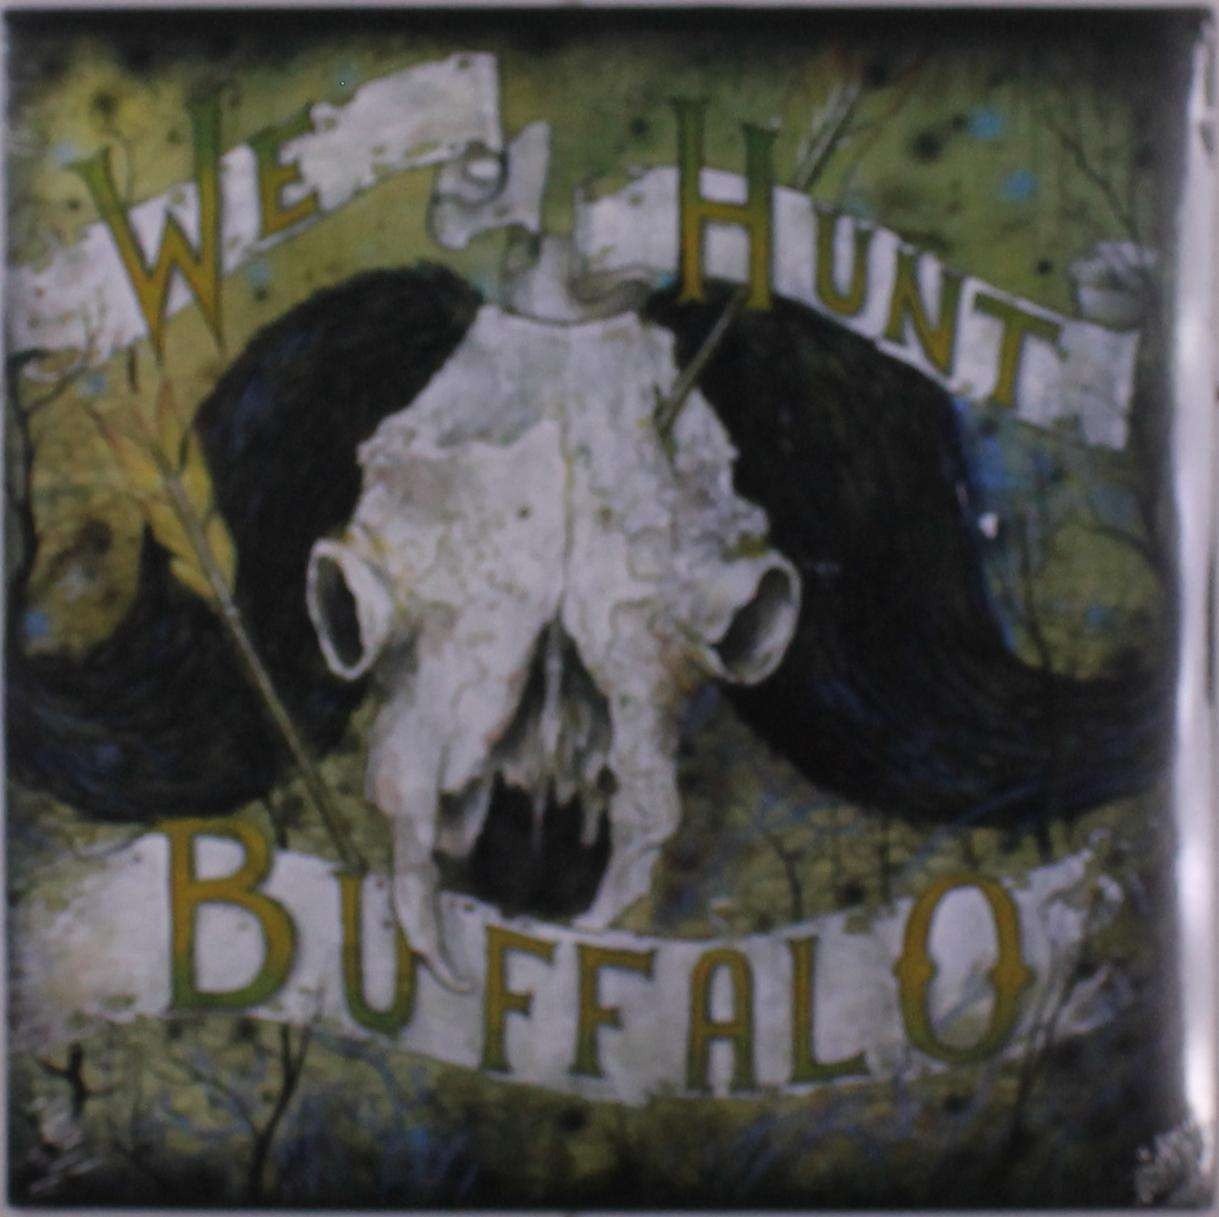 CD Shop - WE HUNT BUFFALO WE HUNT BUFFALO